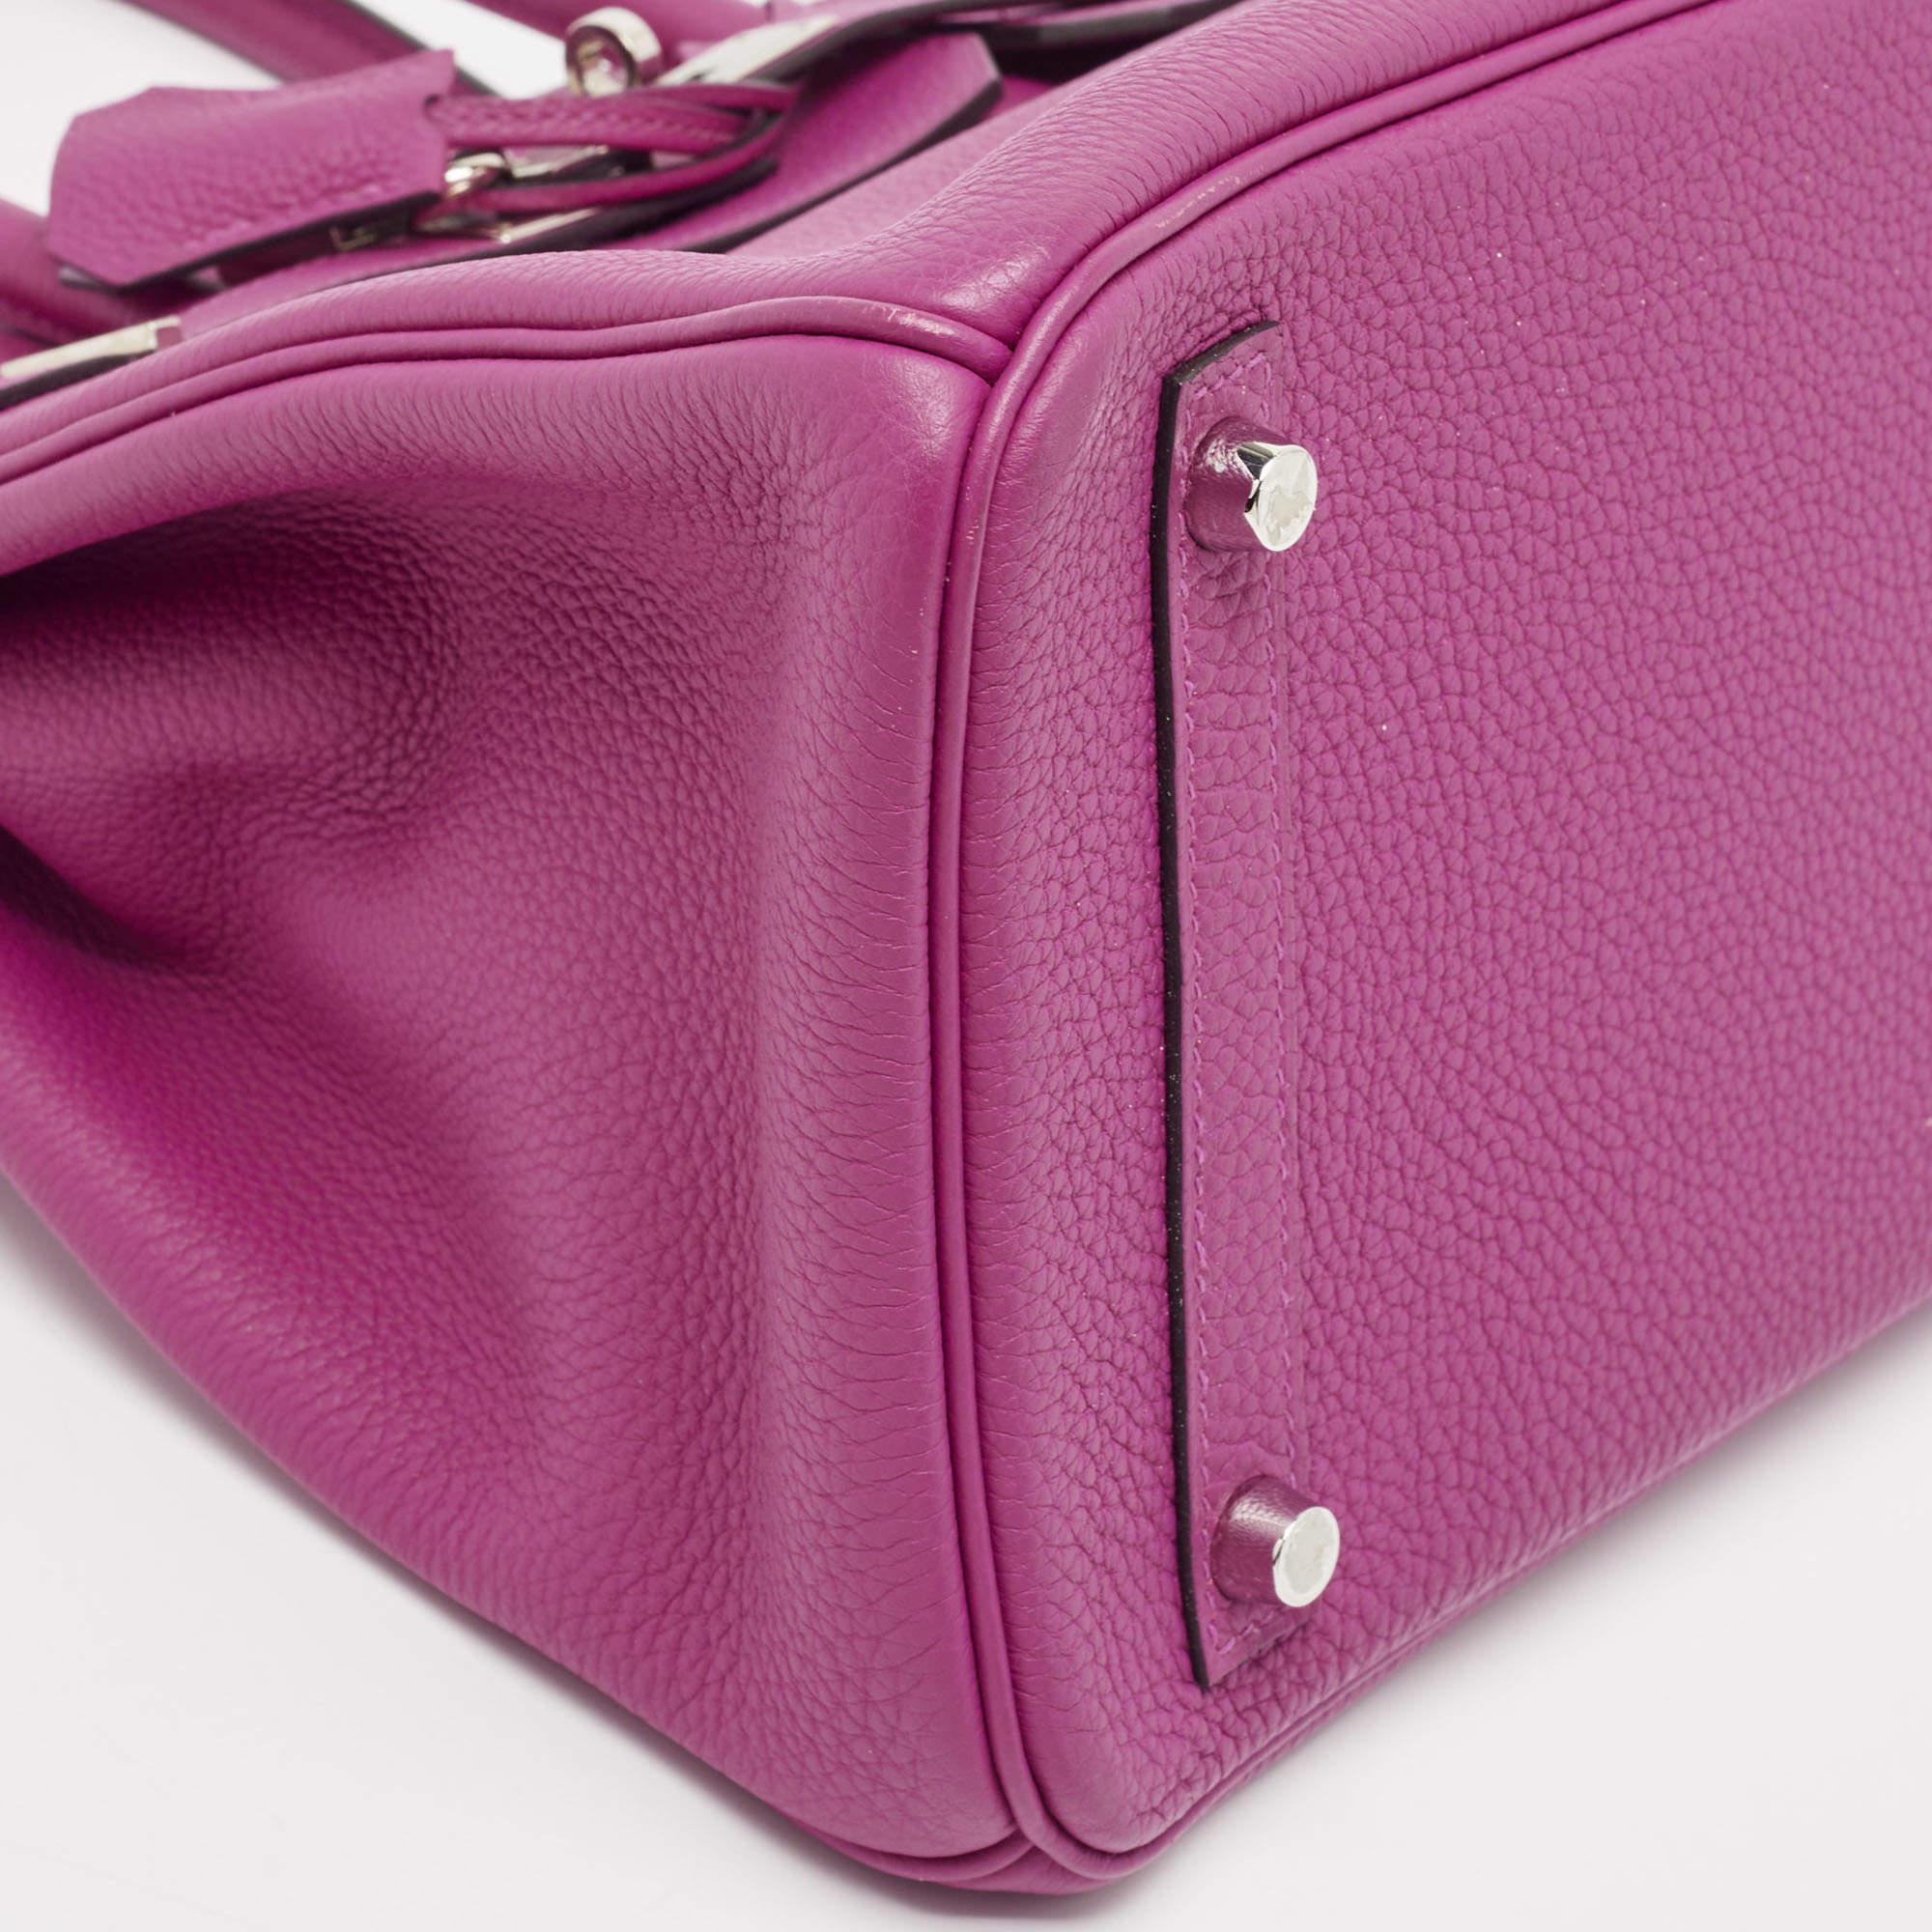 Hermès Rose Pourpre Togo Leather Palladium Finish Birkin 30 Bag 3